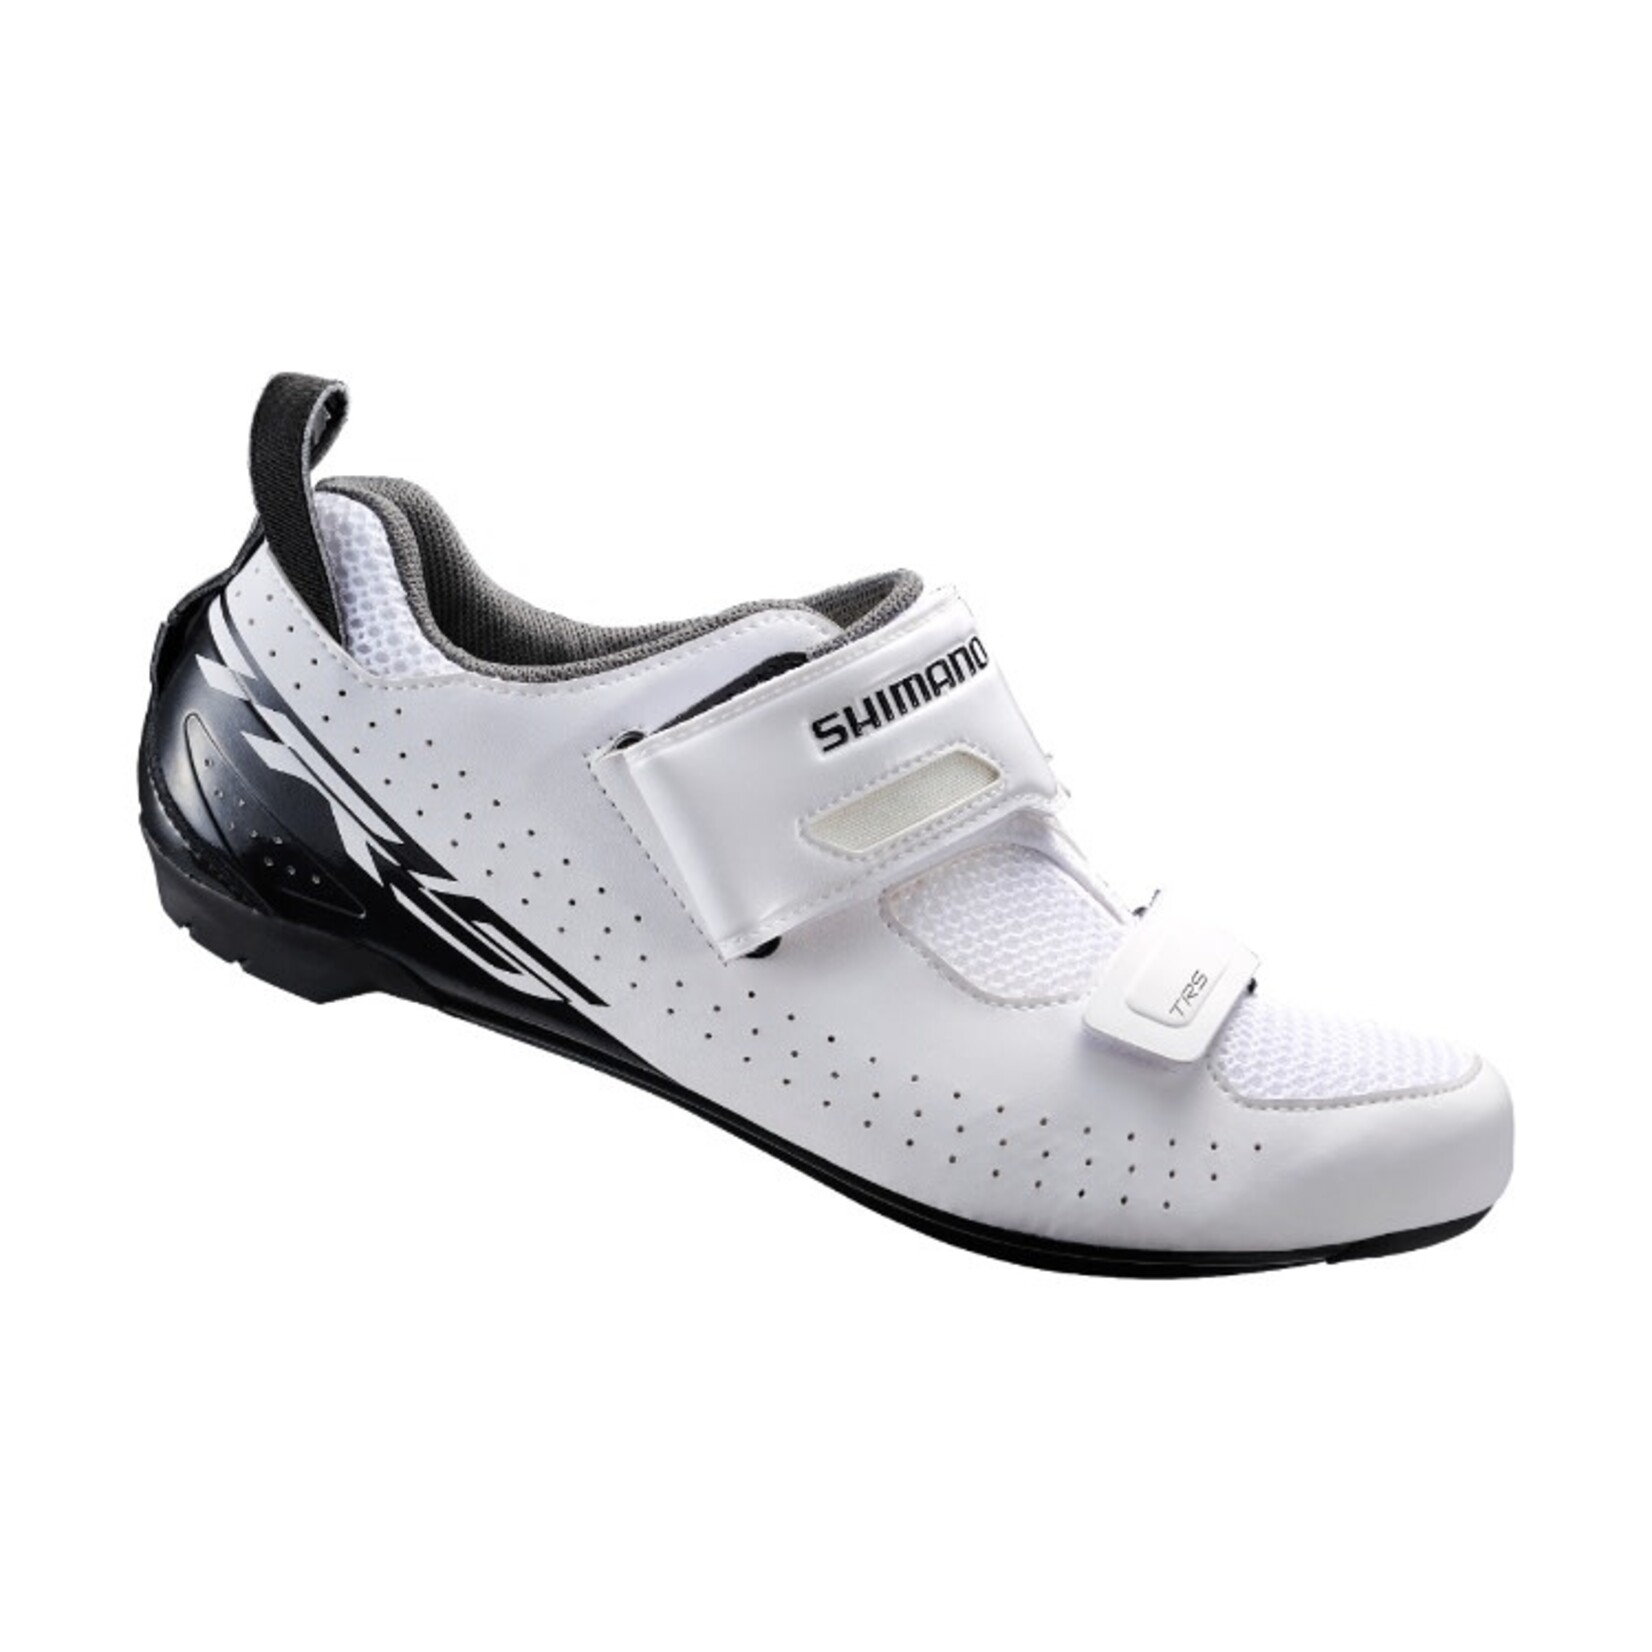 Shimano Shimano Bike/Cycling Triathlon Shoe TR500 - White - Size 36 - Glass Fiber